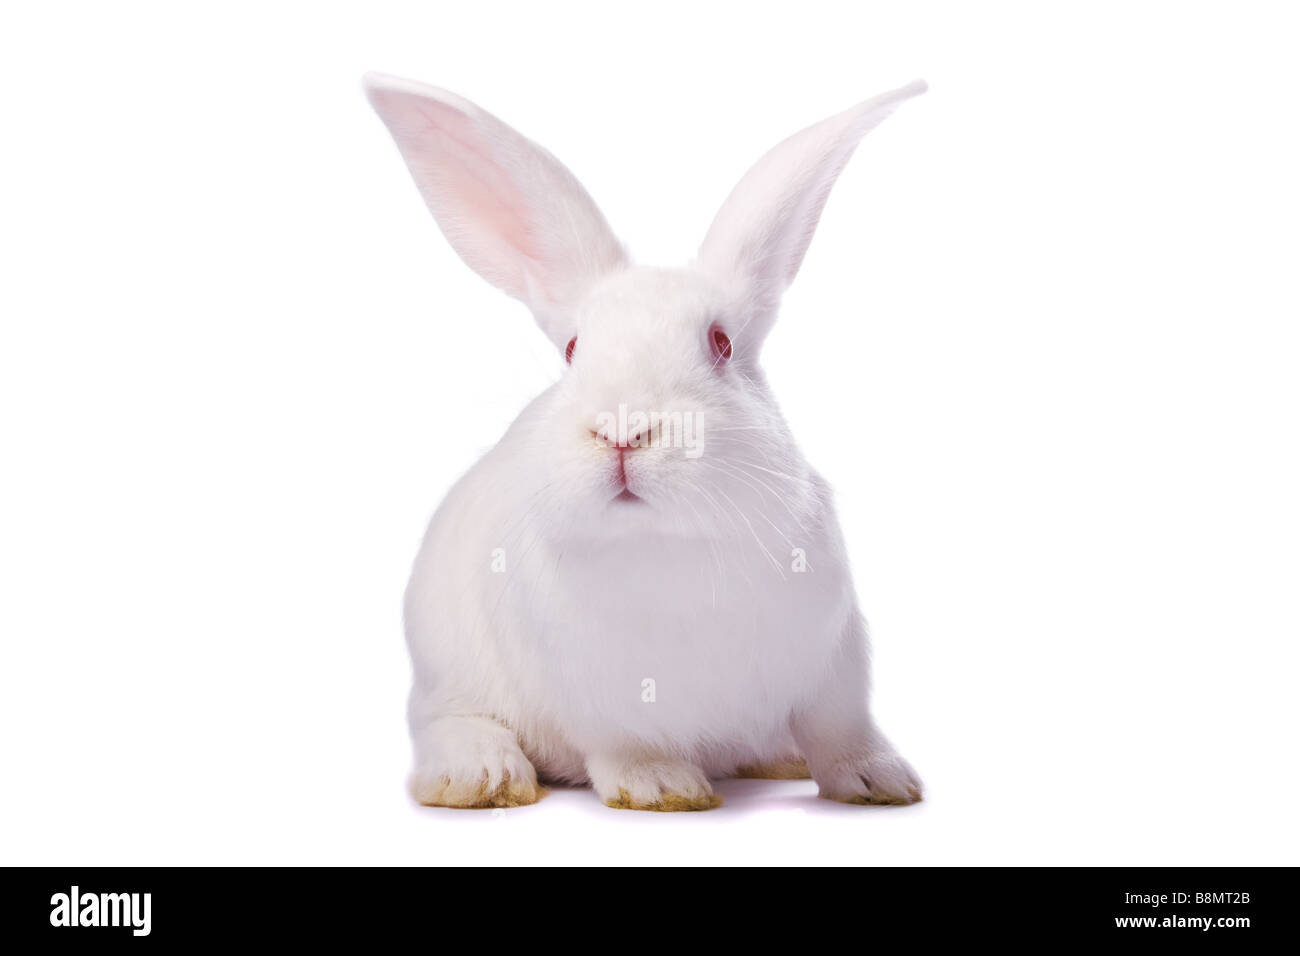 Curioso conejo albino aislado sobre fondo blanco /// Conejito de Pascua recorte recorte ojos rojos curioso sentado lindo suaves pieles de animales domésticos furry Foto de stock